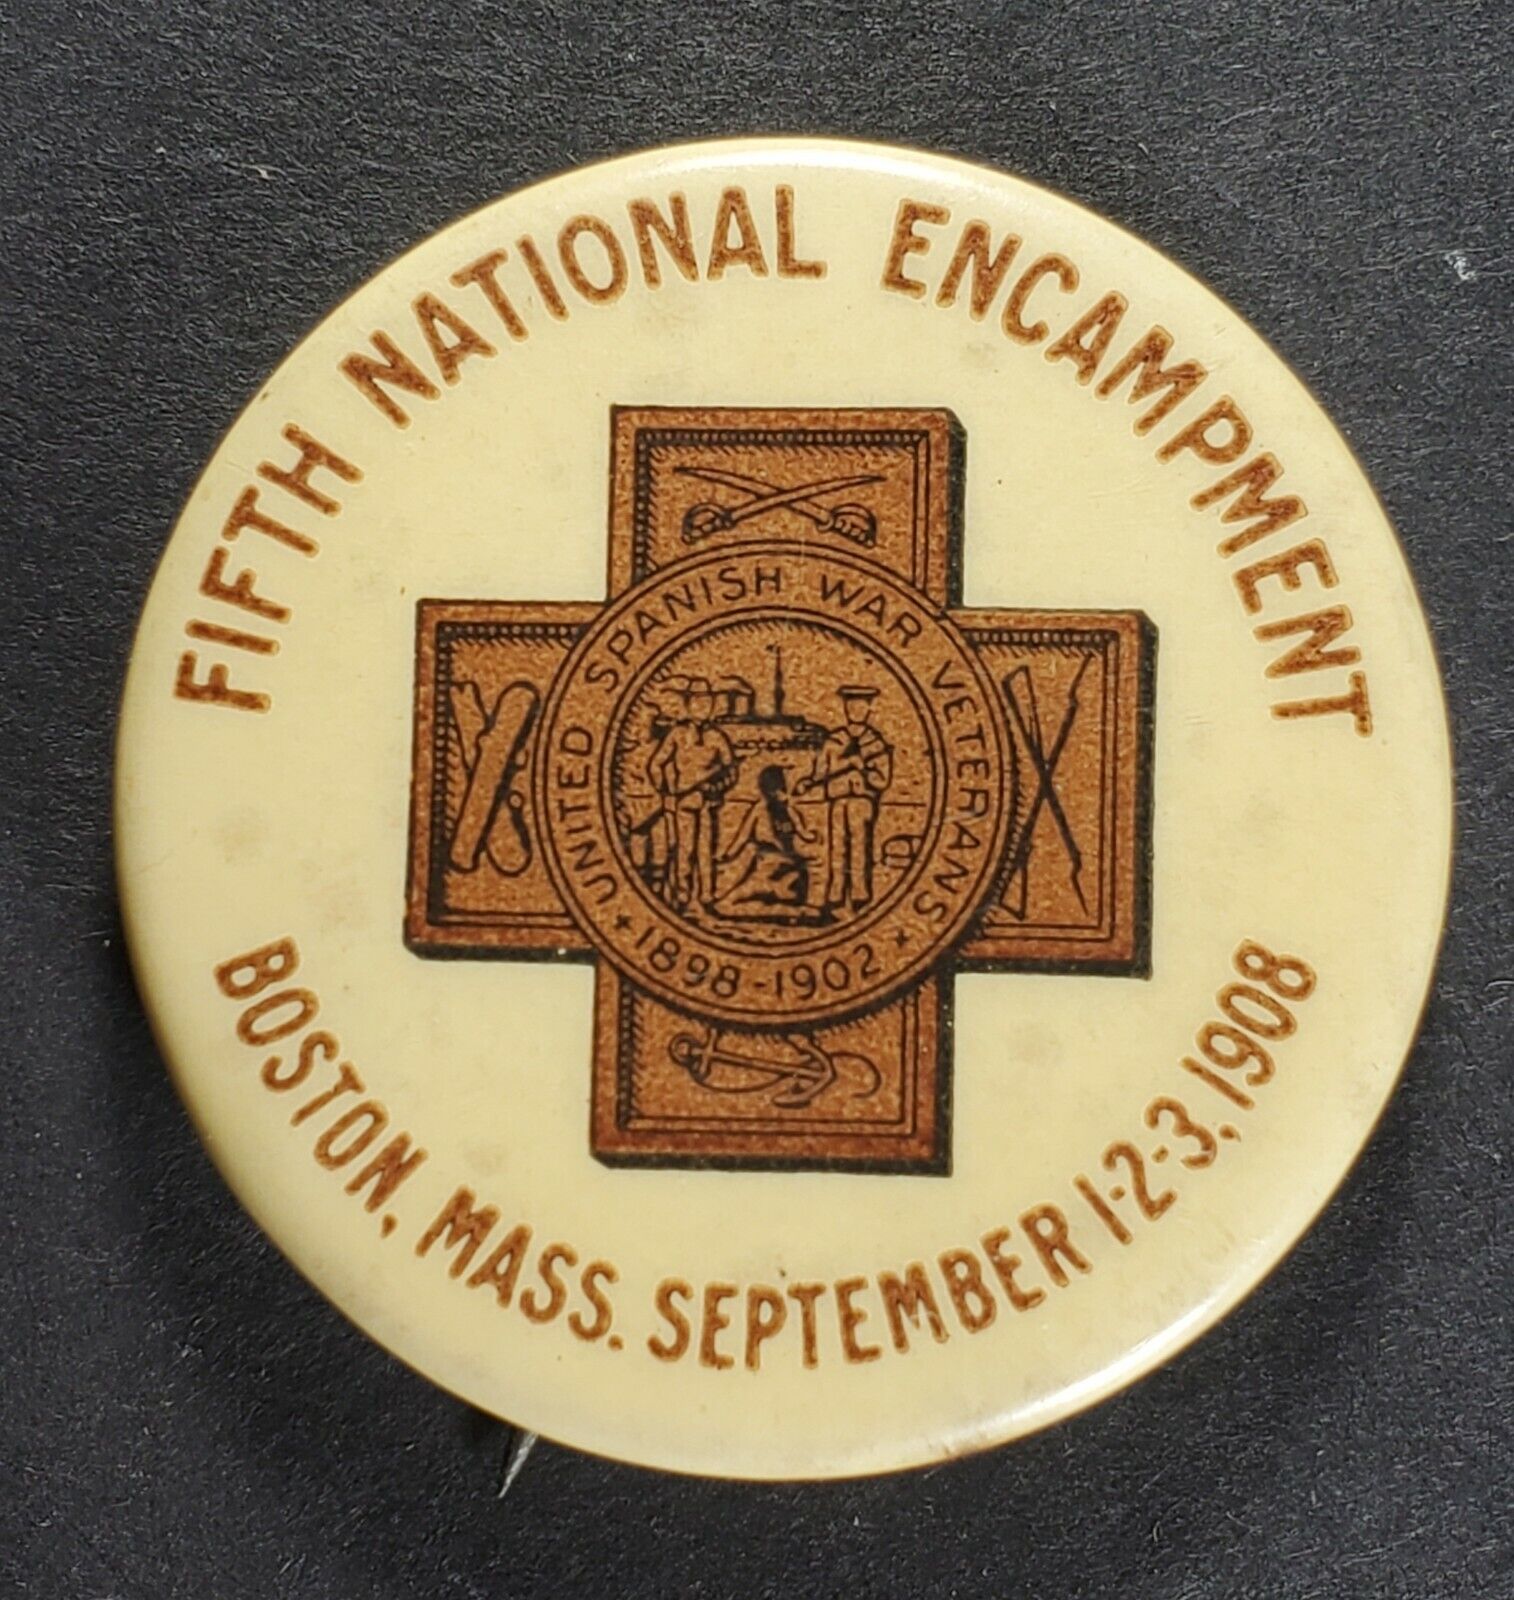 1908 Boston Fifth National Encampment United Spanish war Veterans Pinback Pin